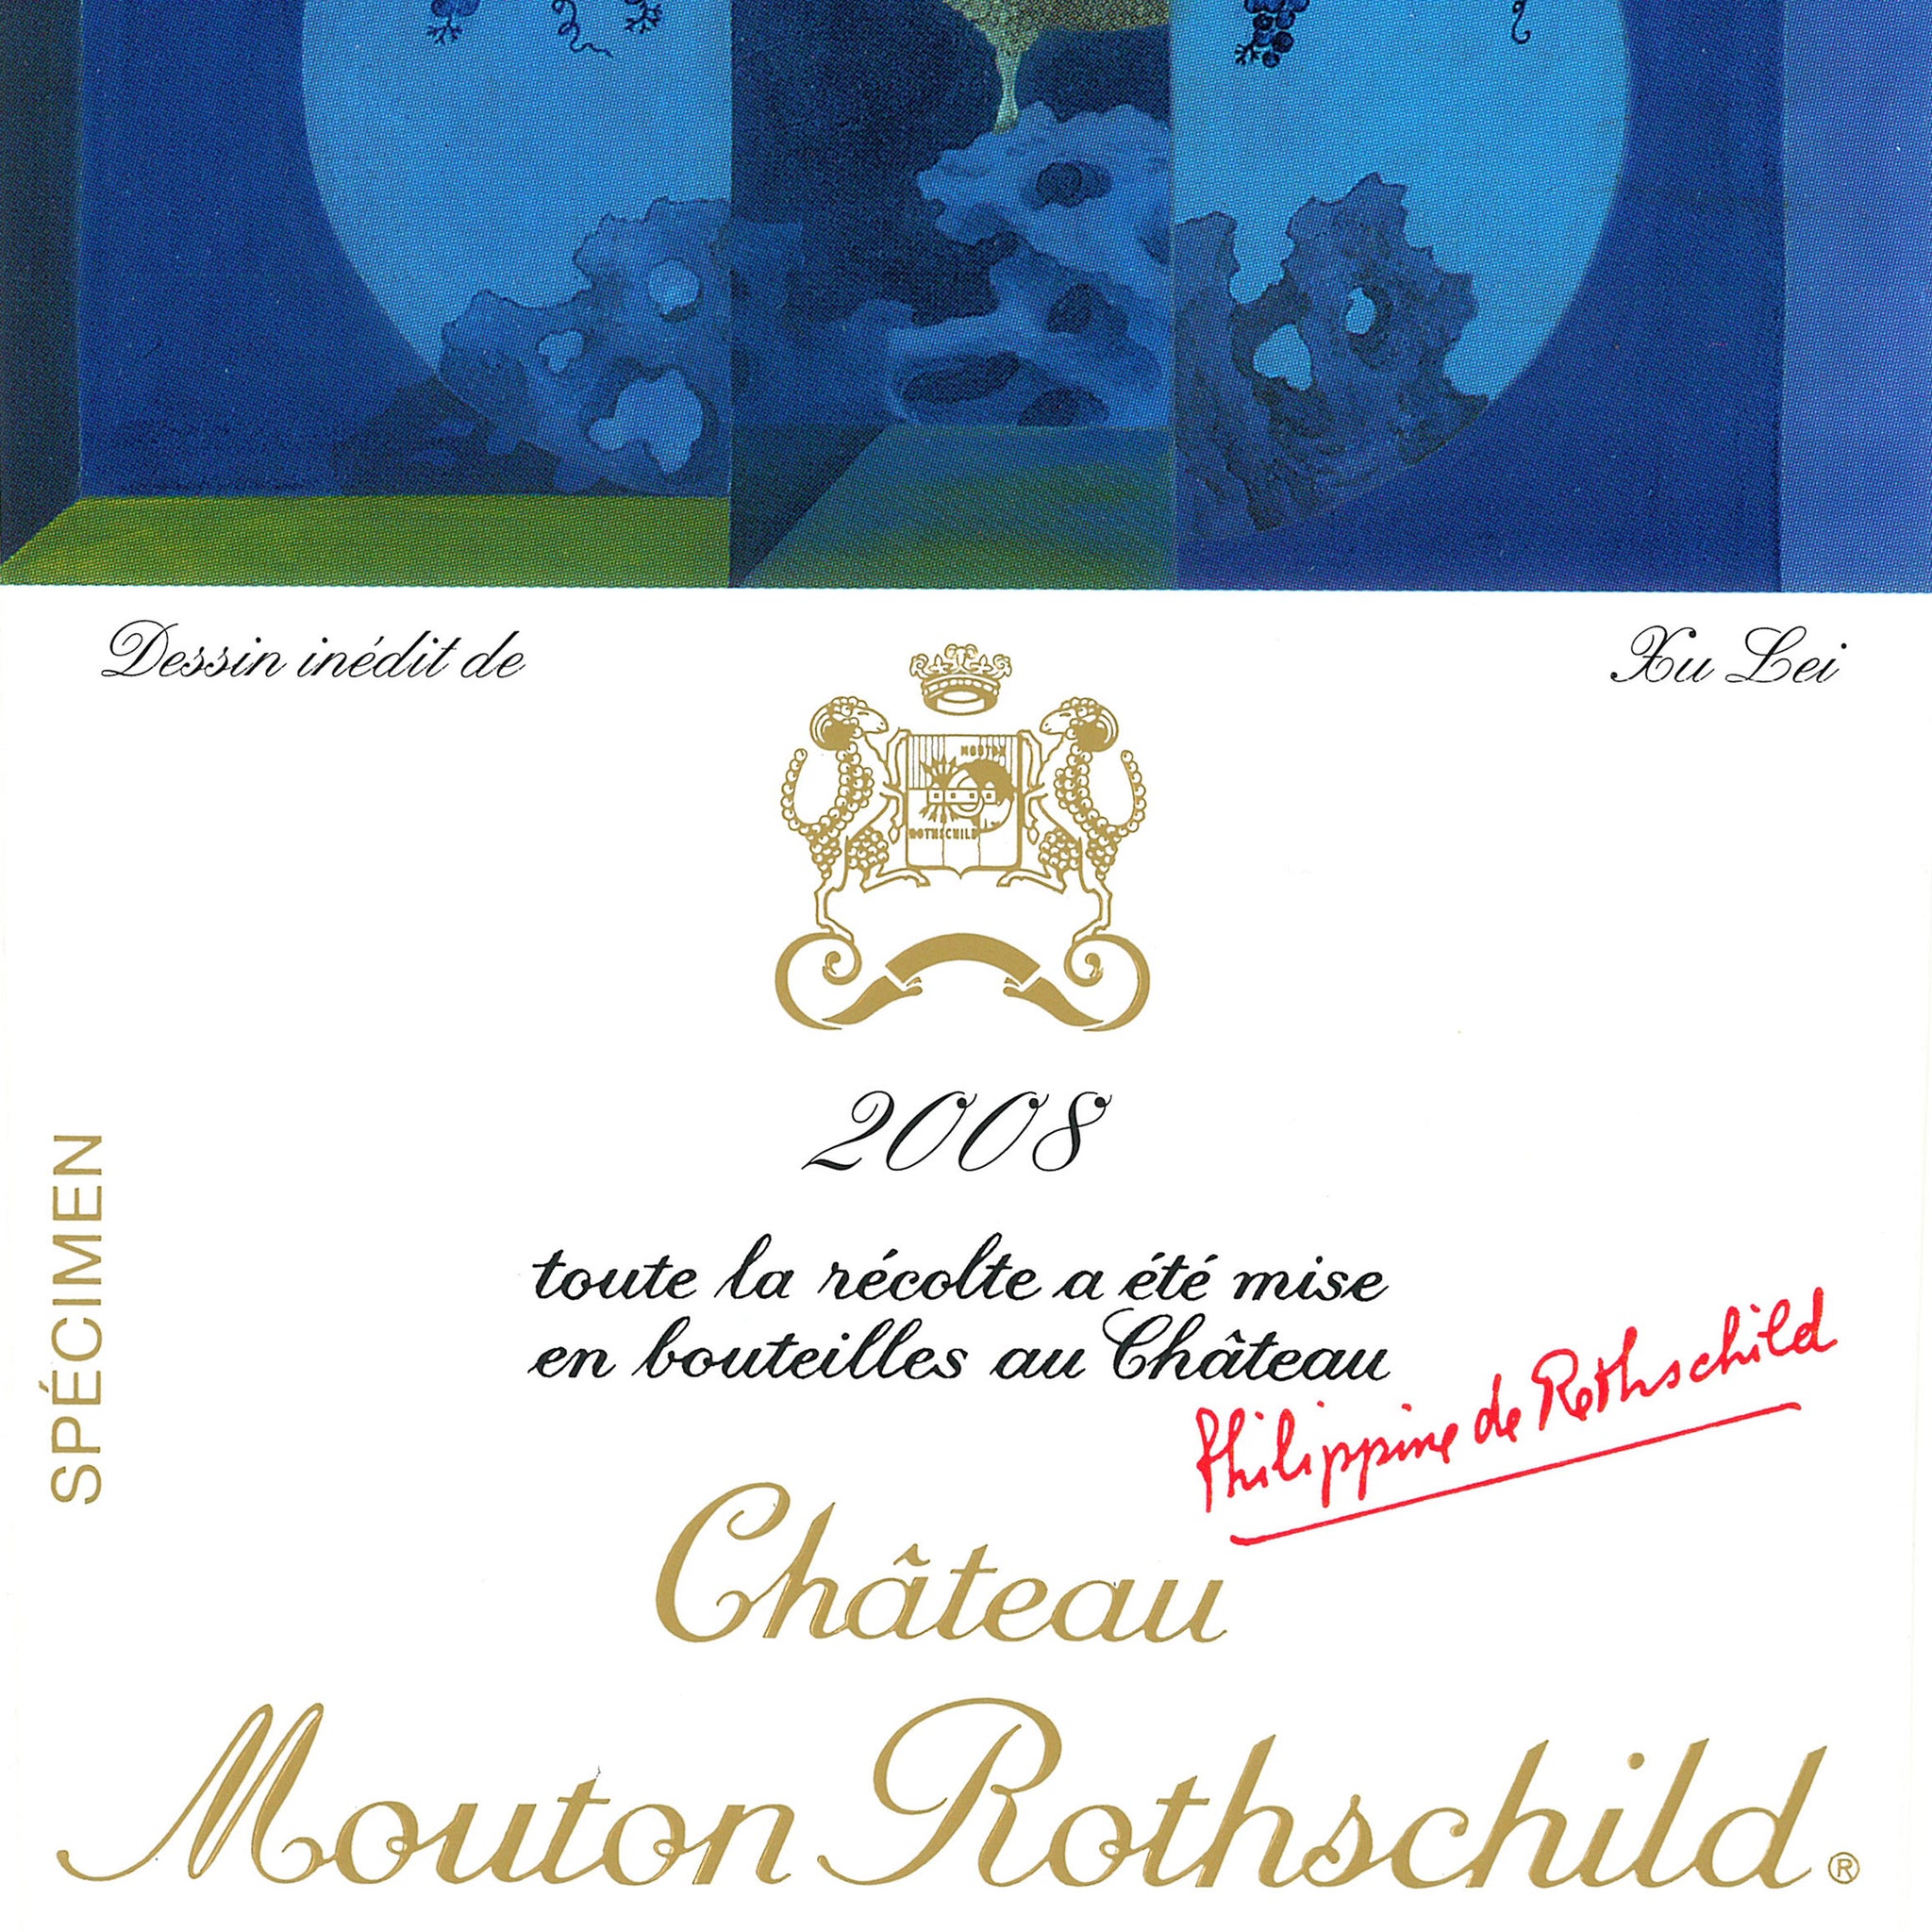 Chateau Mouton Rothschild 2008 (6x75cl)